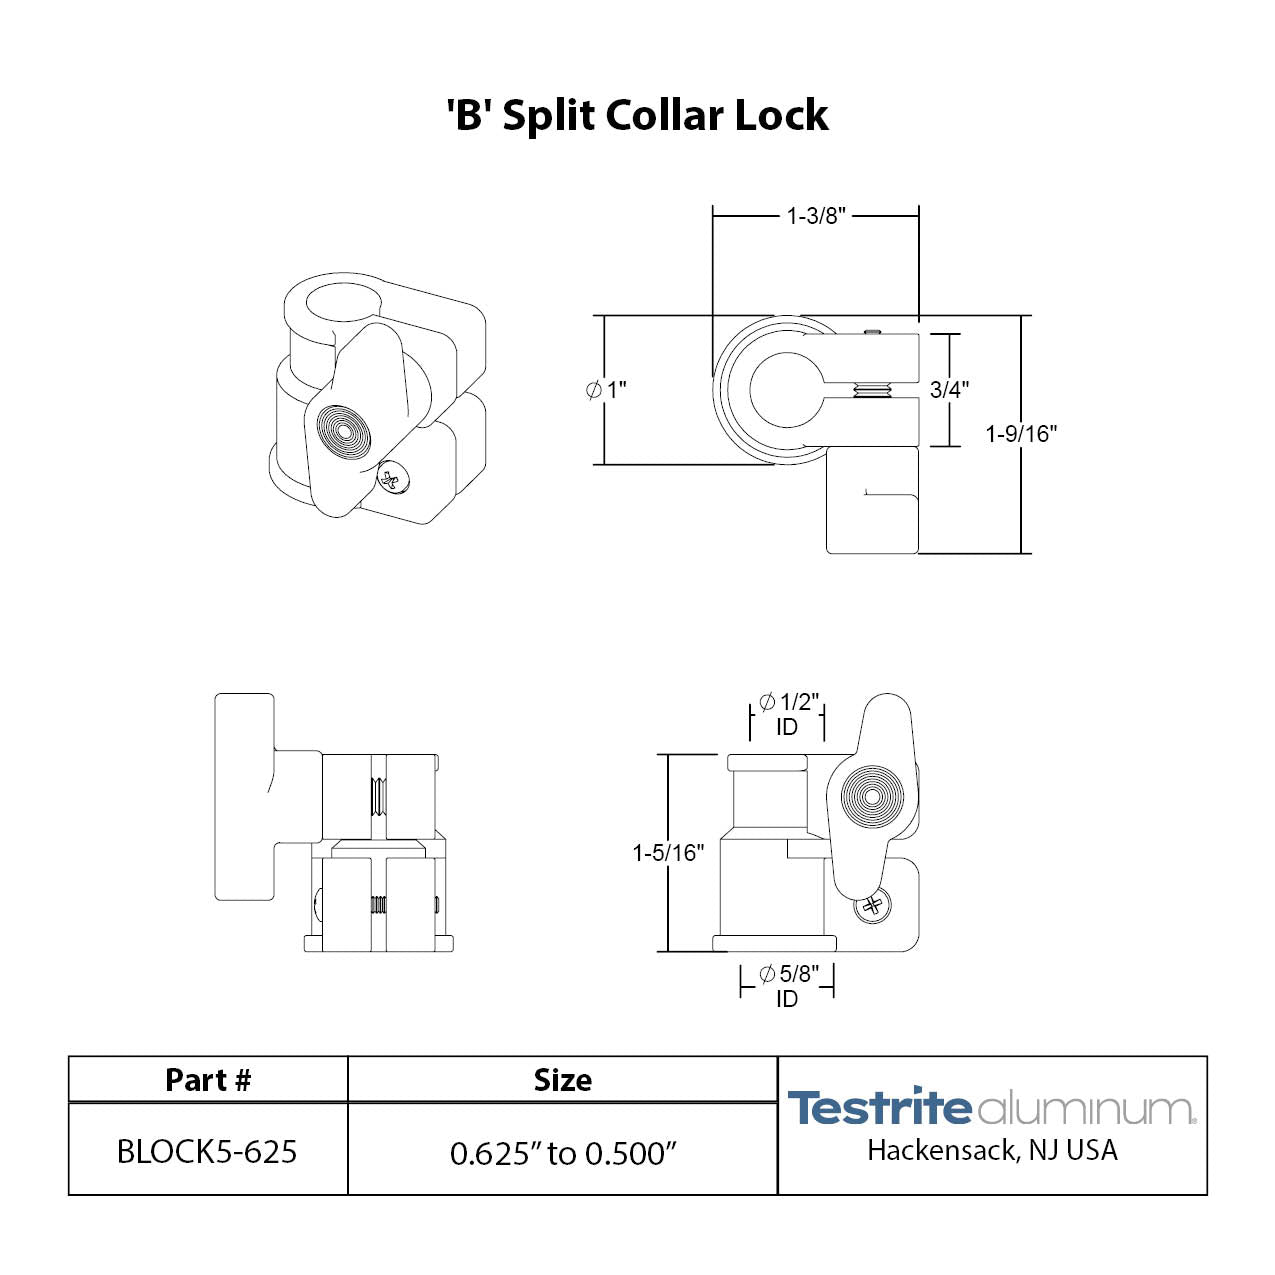 B Split Collar Lock 1/2" to 5/8", 0.5" to 0.625" Telescopic tubing clamp